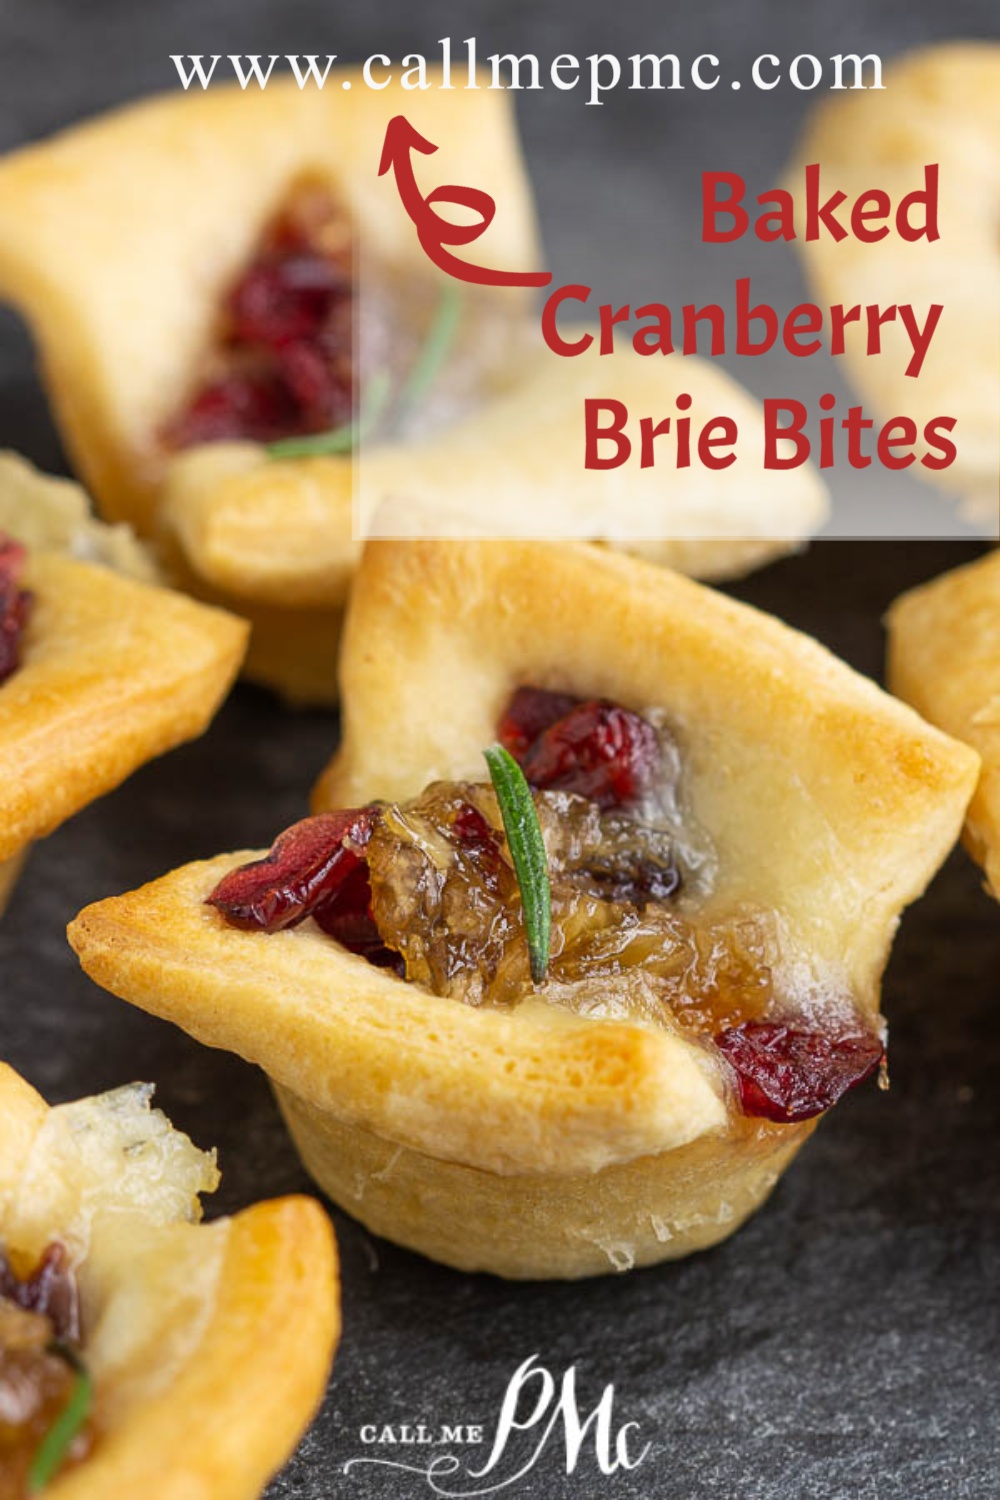 Bakes Cranberry Brie Bites 